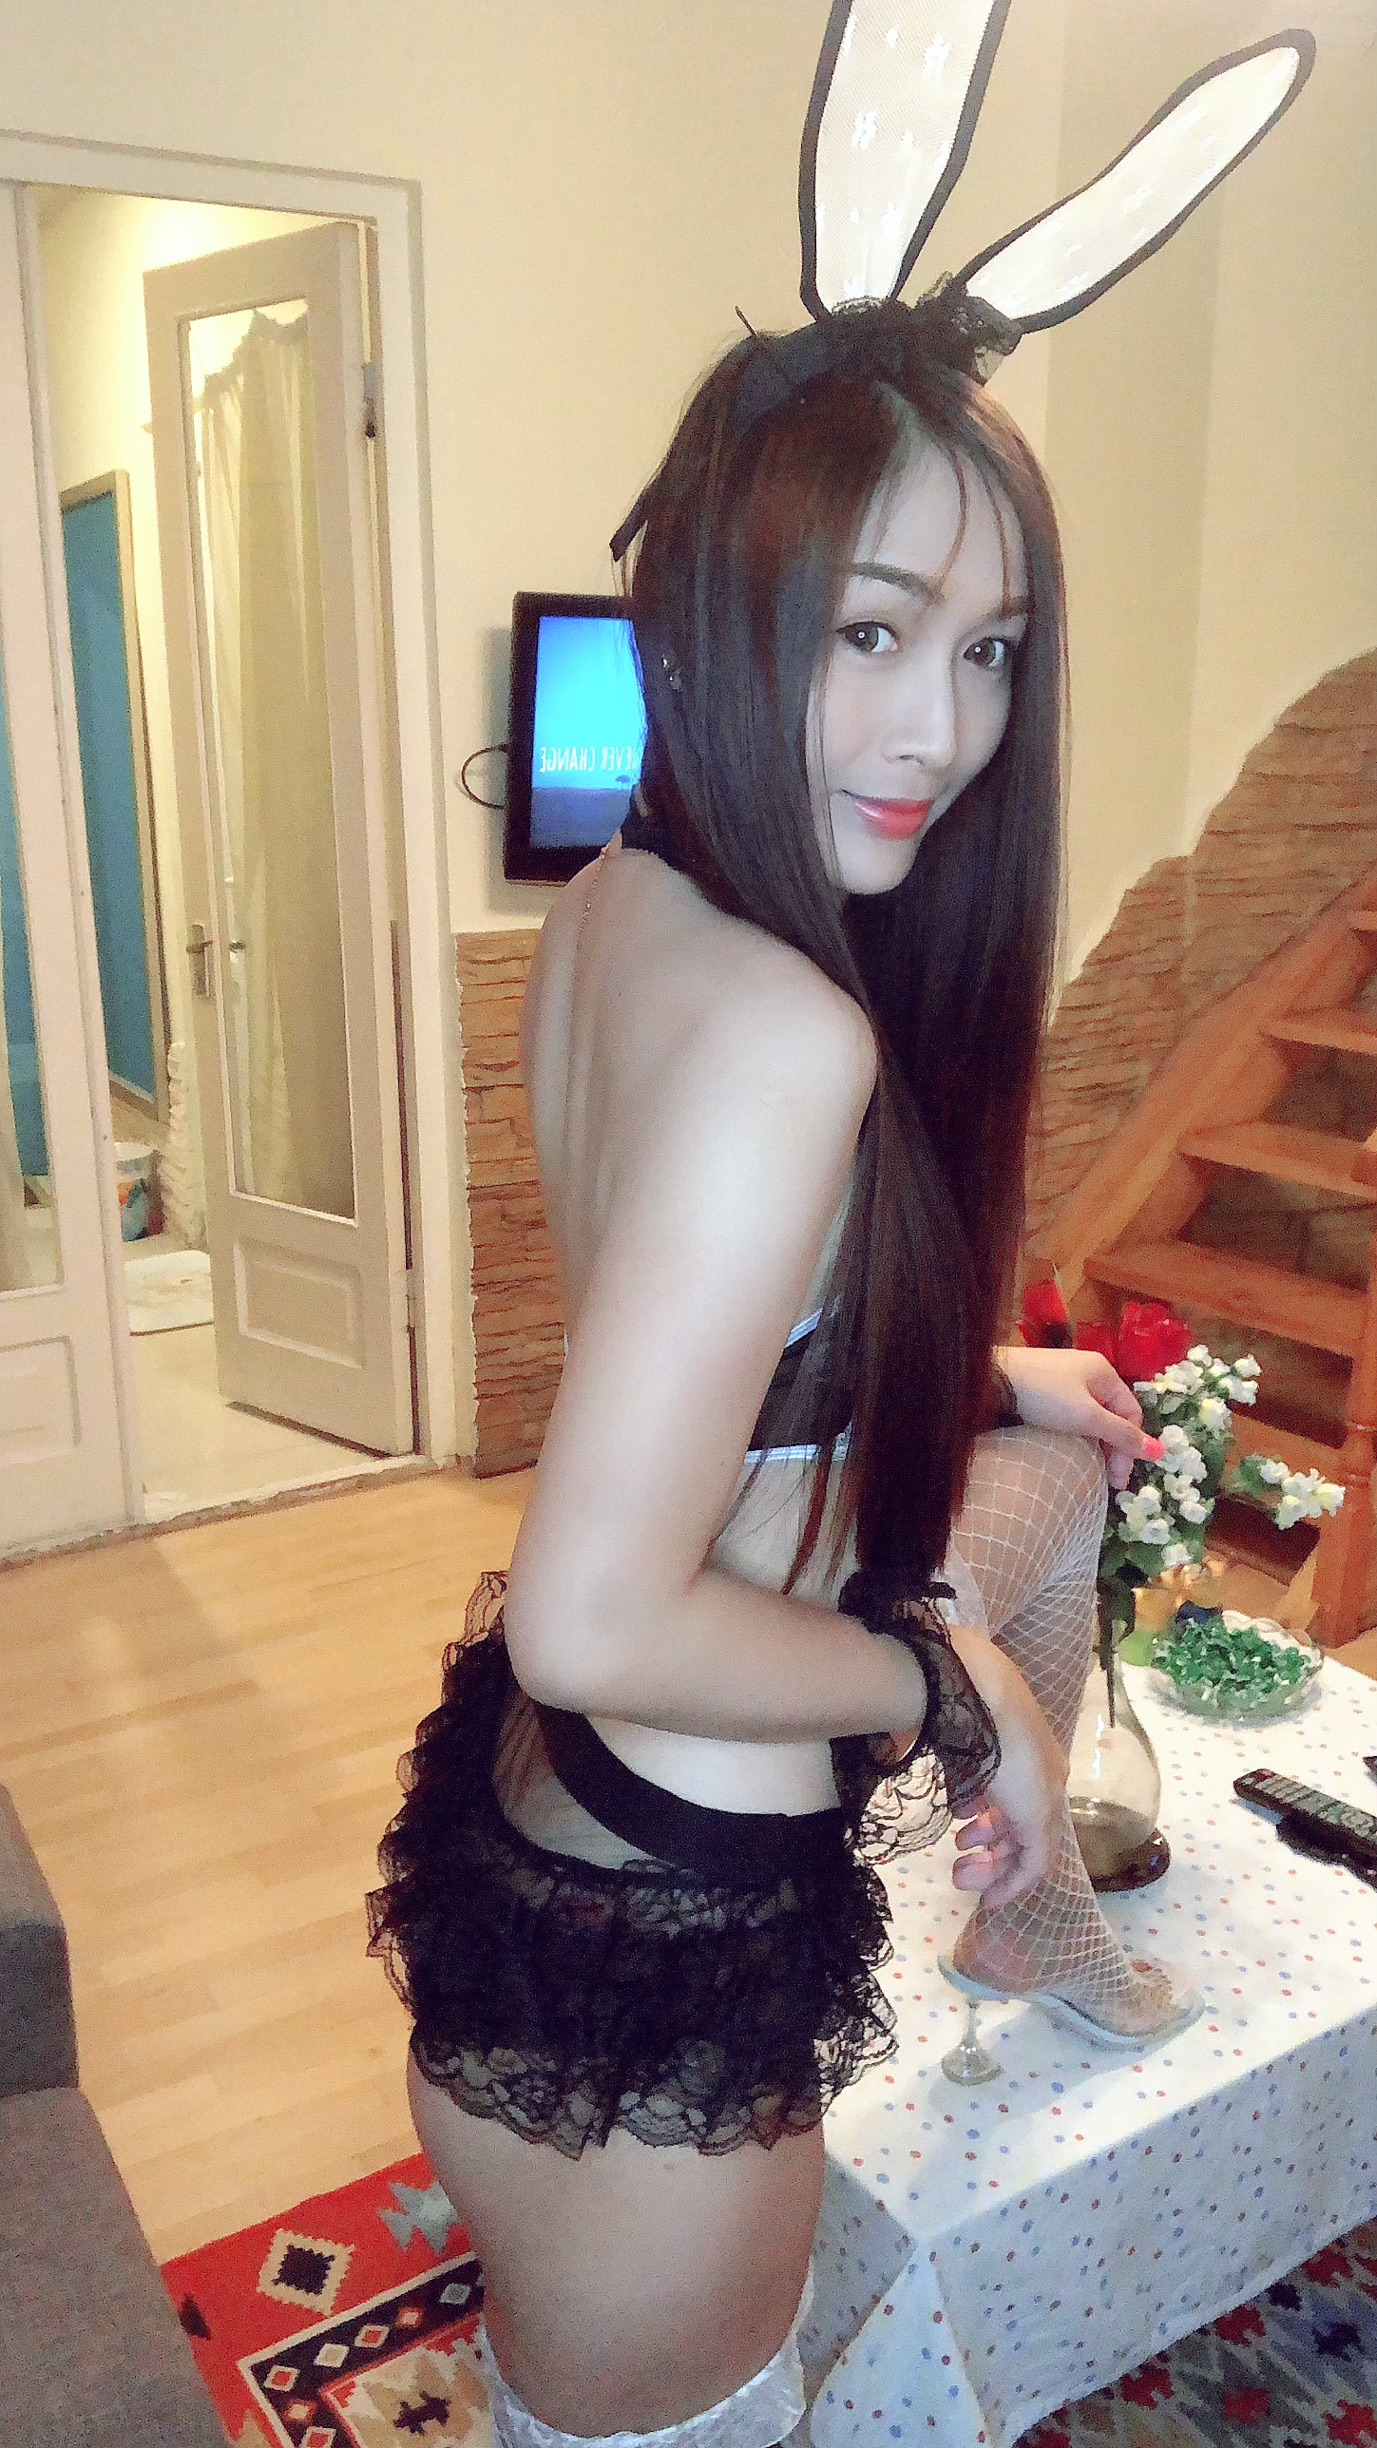 TOYBABEStella1 Female,English,41-45kg,Vietnamese,Couples